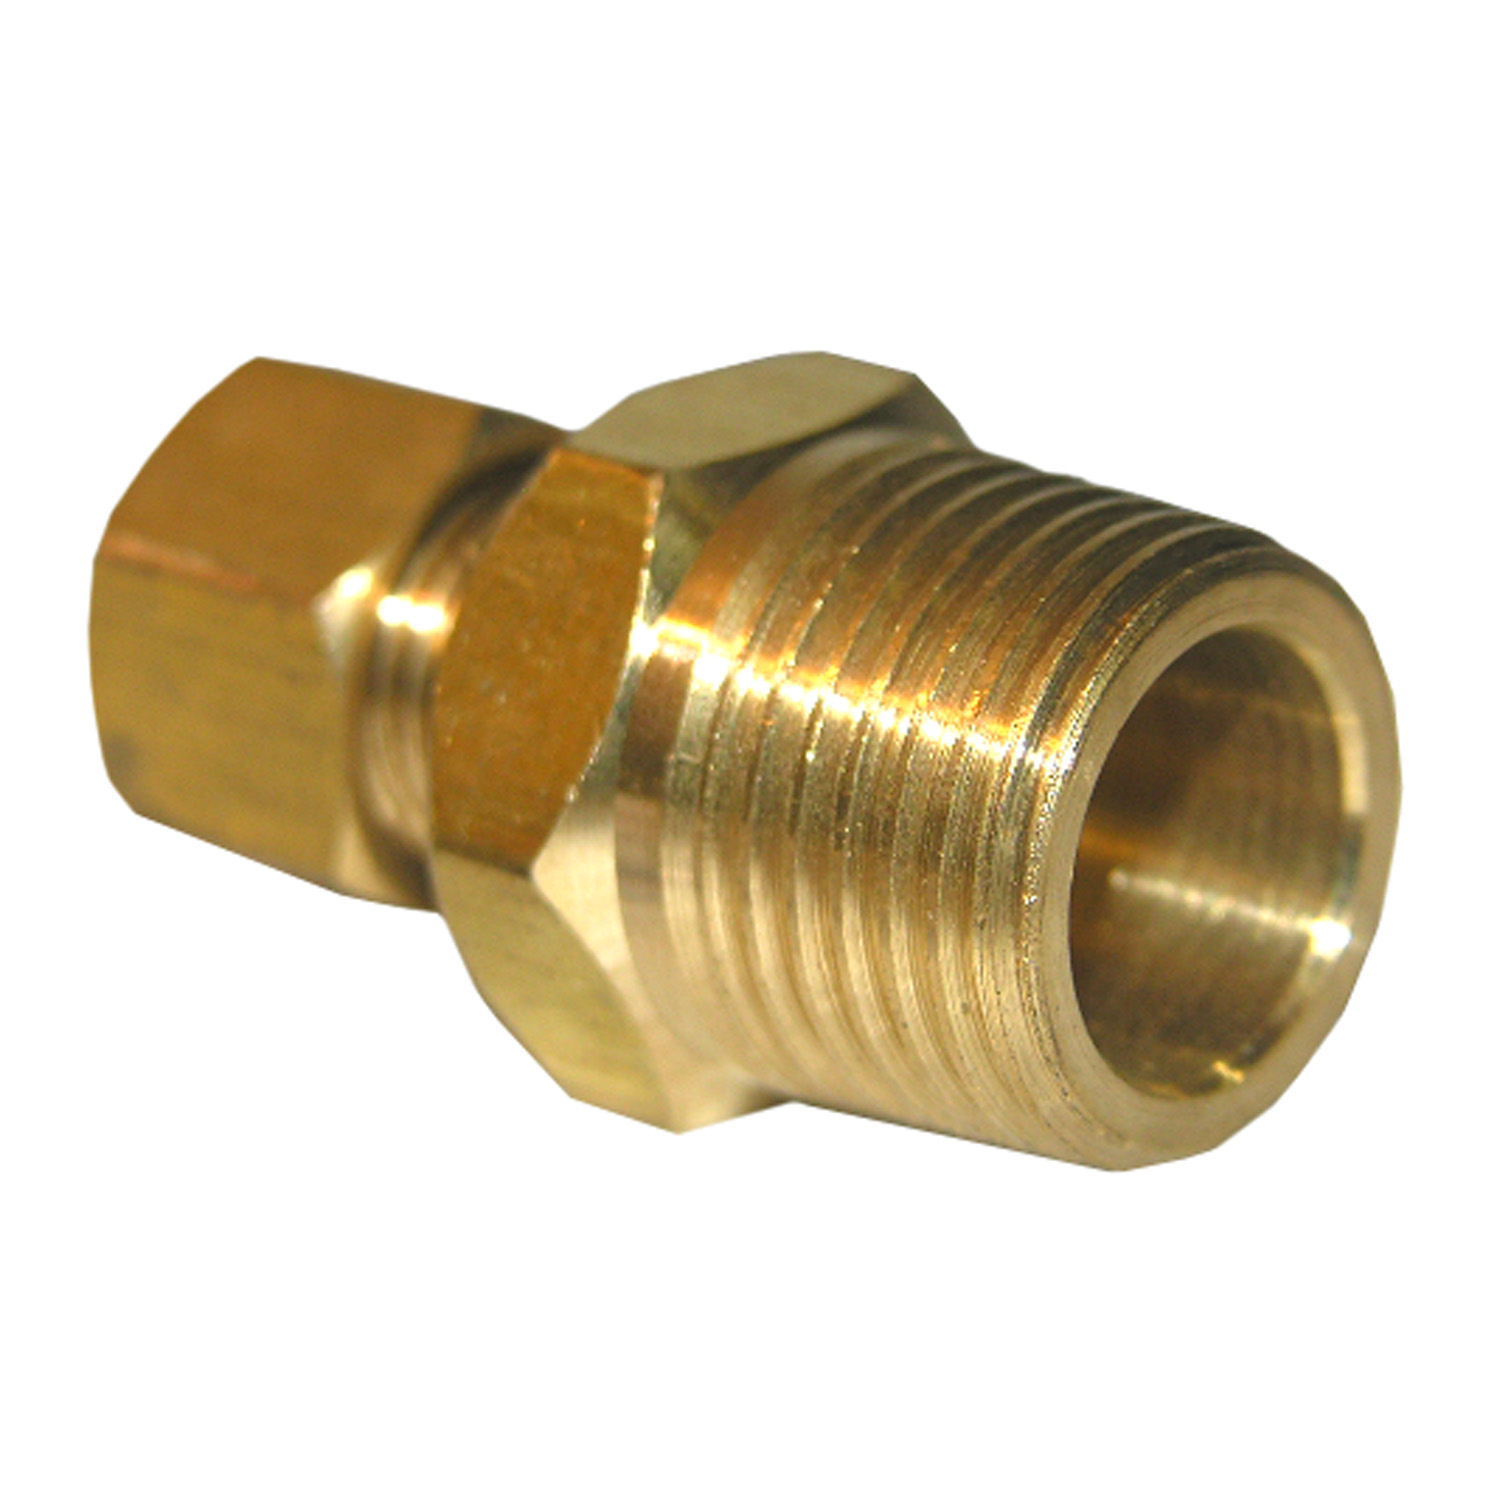 17-6815 Pipe Adapter, 1/4 x 3/8 in, Compression x MPT, Brass, 150 psi Pressure